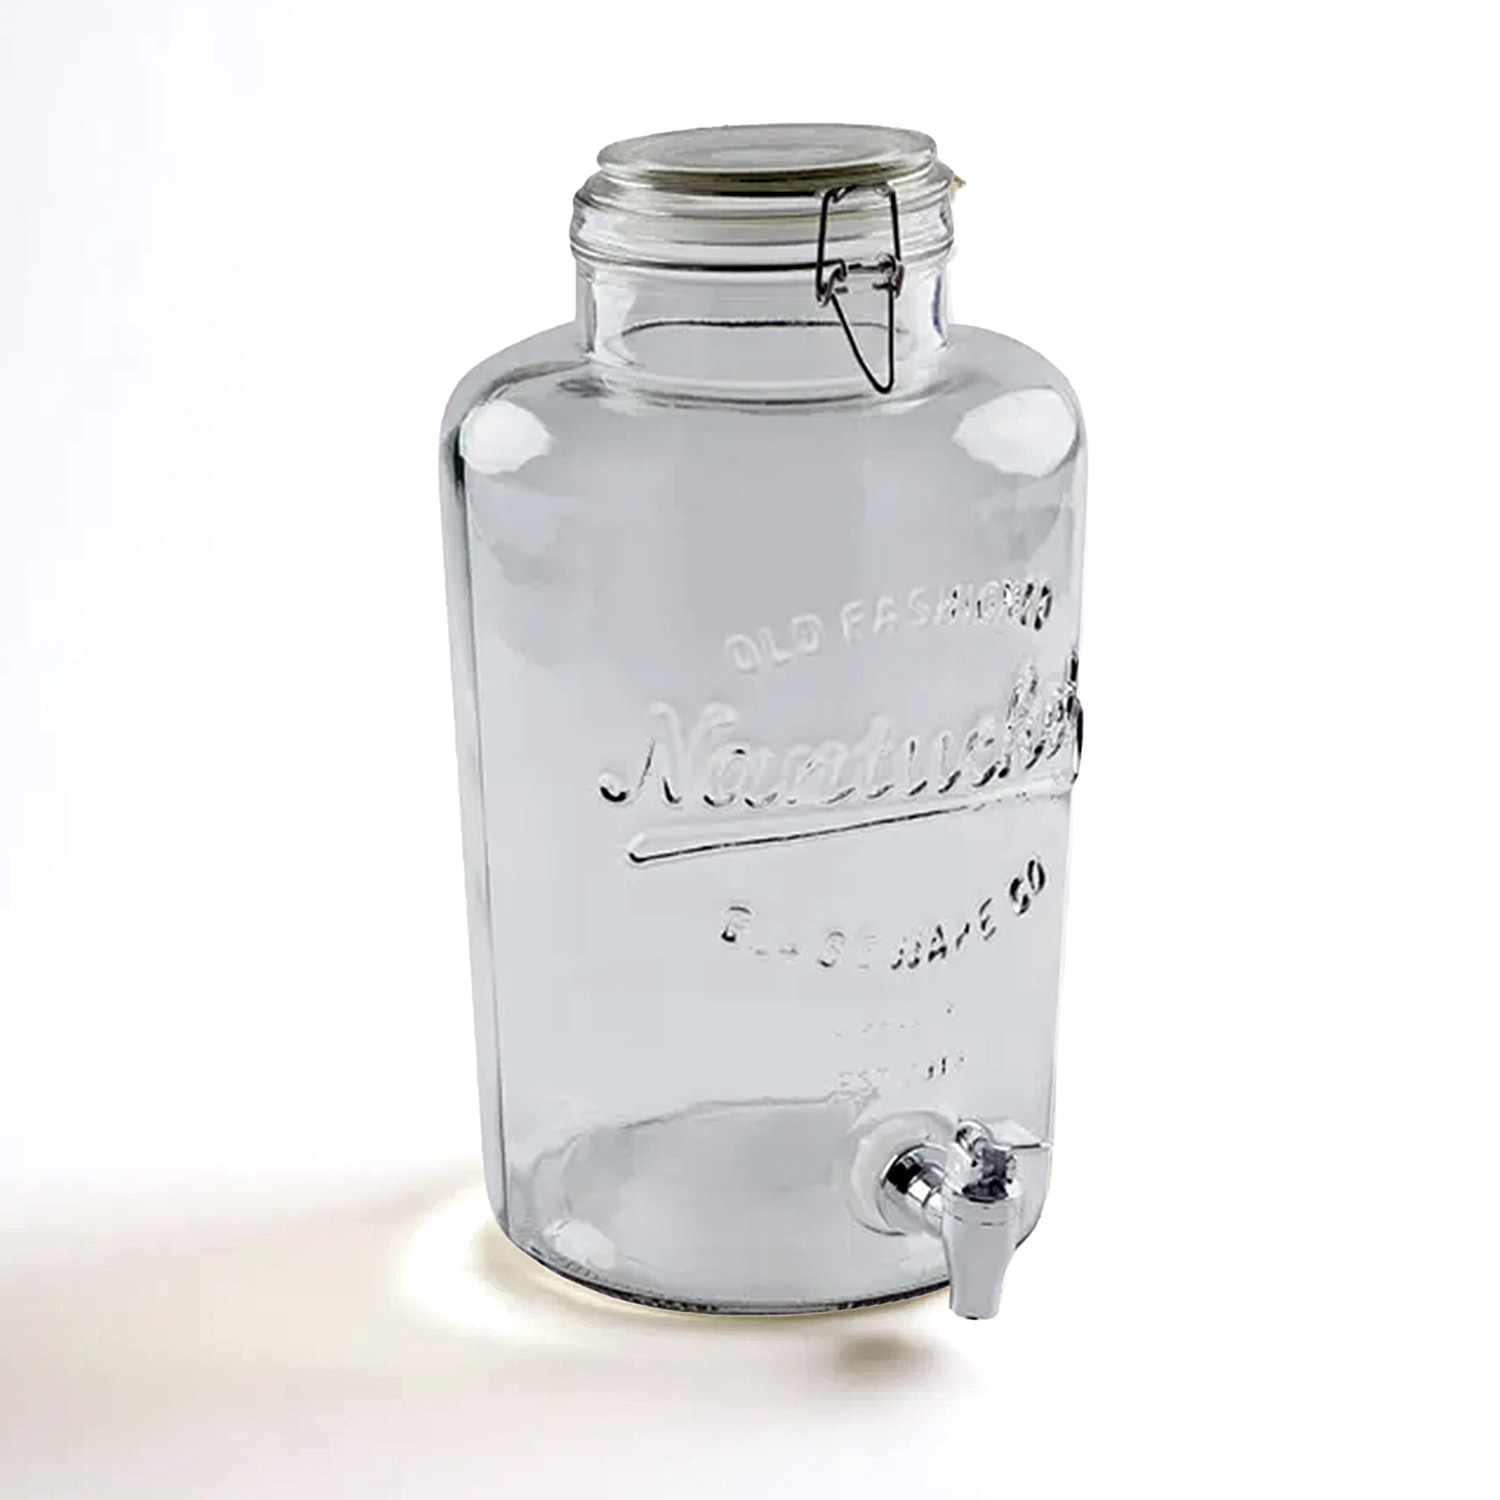 Drink-Dispenser-Jar-with-8L-Capacity-Size-36x21x21-cm